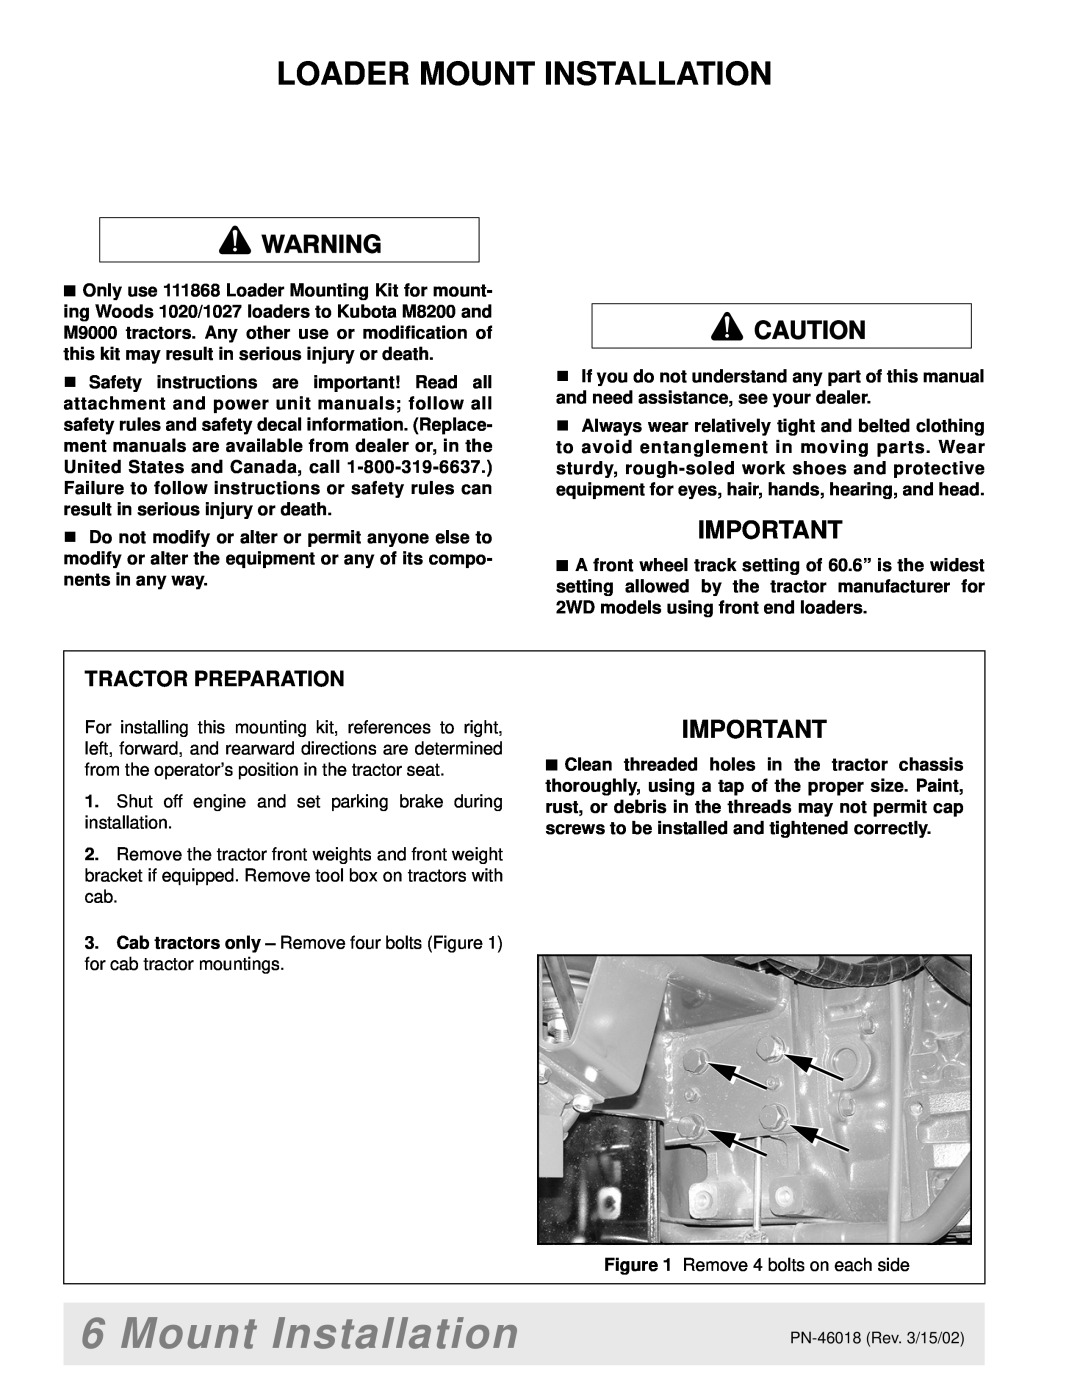 Woods Equipment M8200 manual Loader Mount Installation 